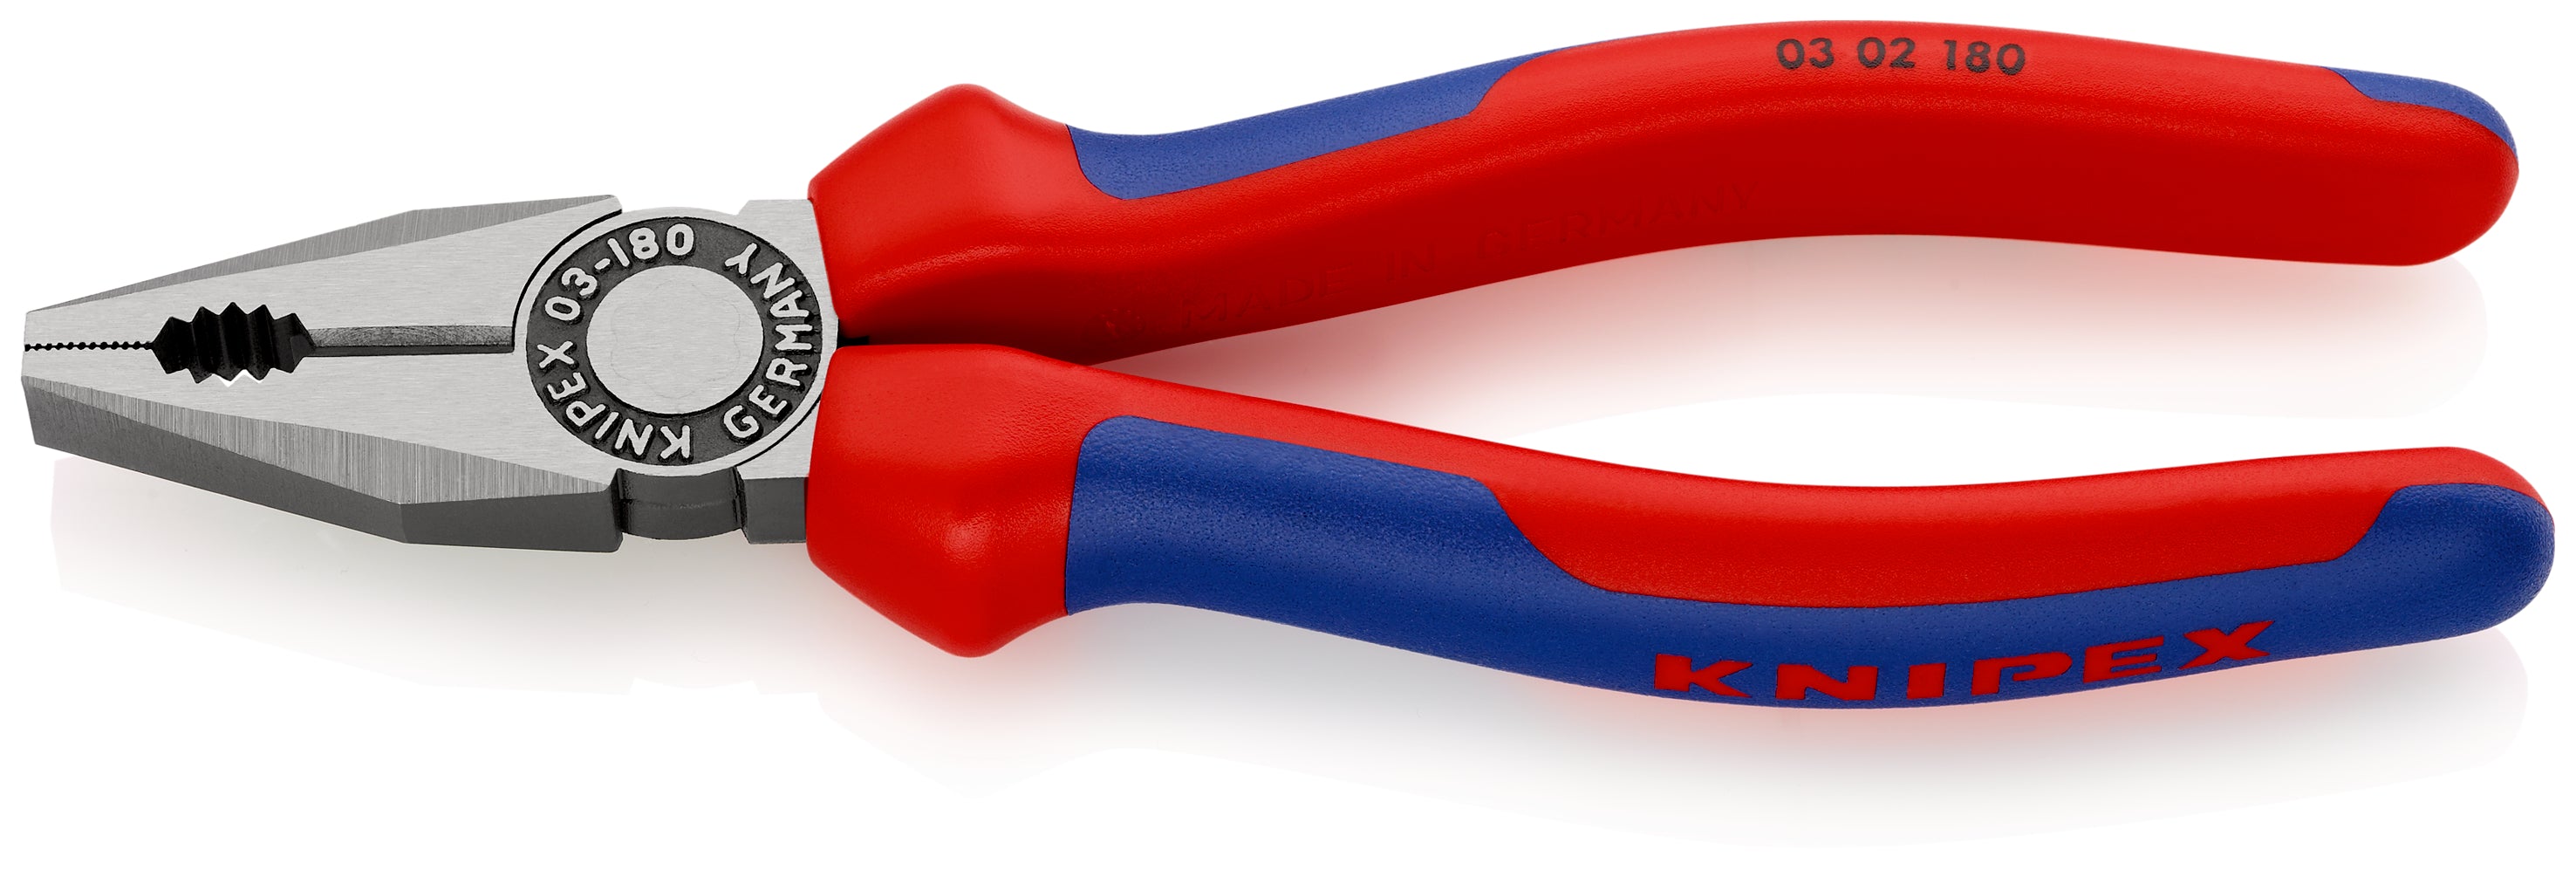 Knipex Needle-nose Combination Pliers - MultiGrip